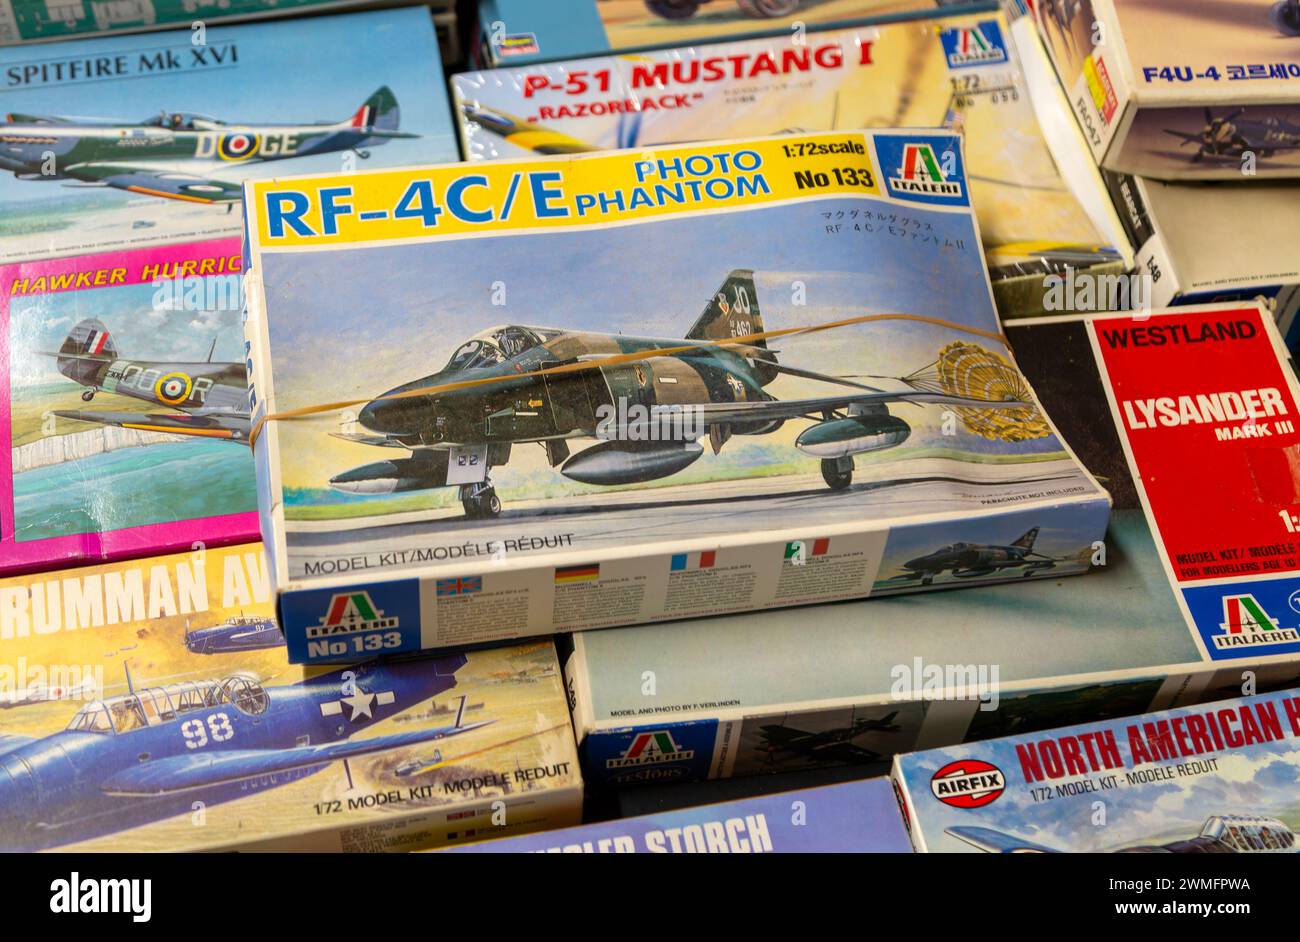 Boxed model plane kits on display at auction, UK - Photo Phantom RF-4cCE Stock Photo